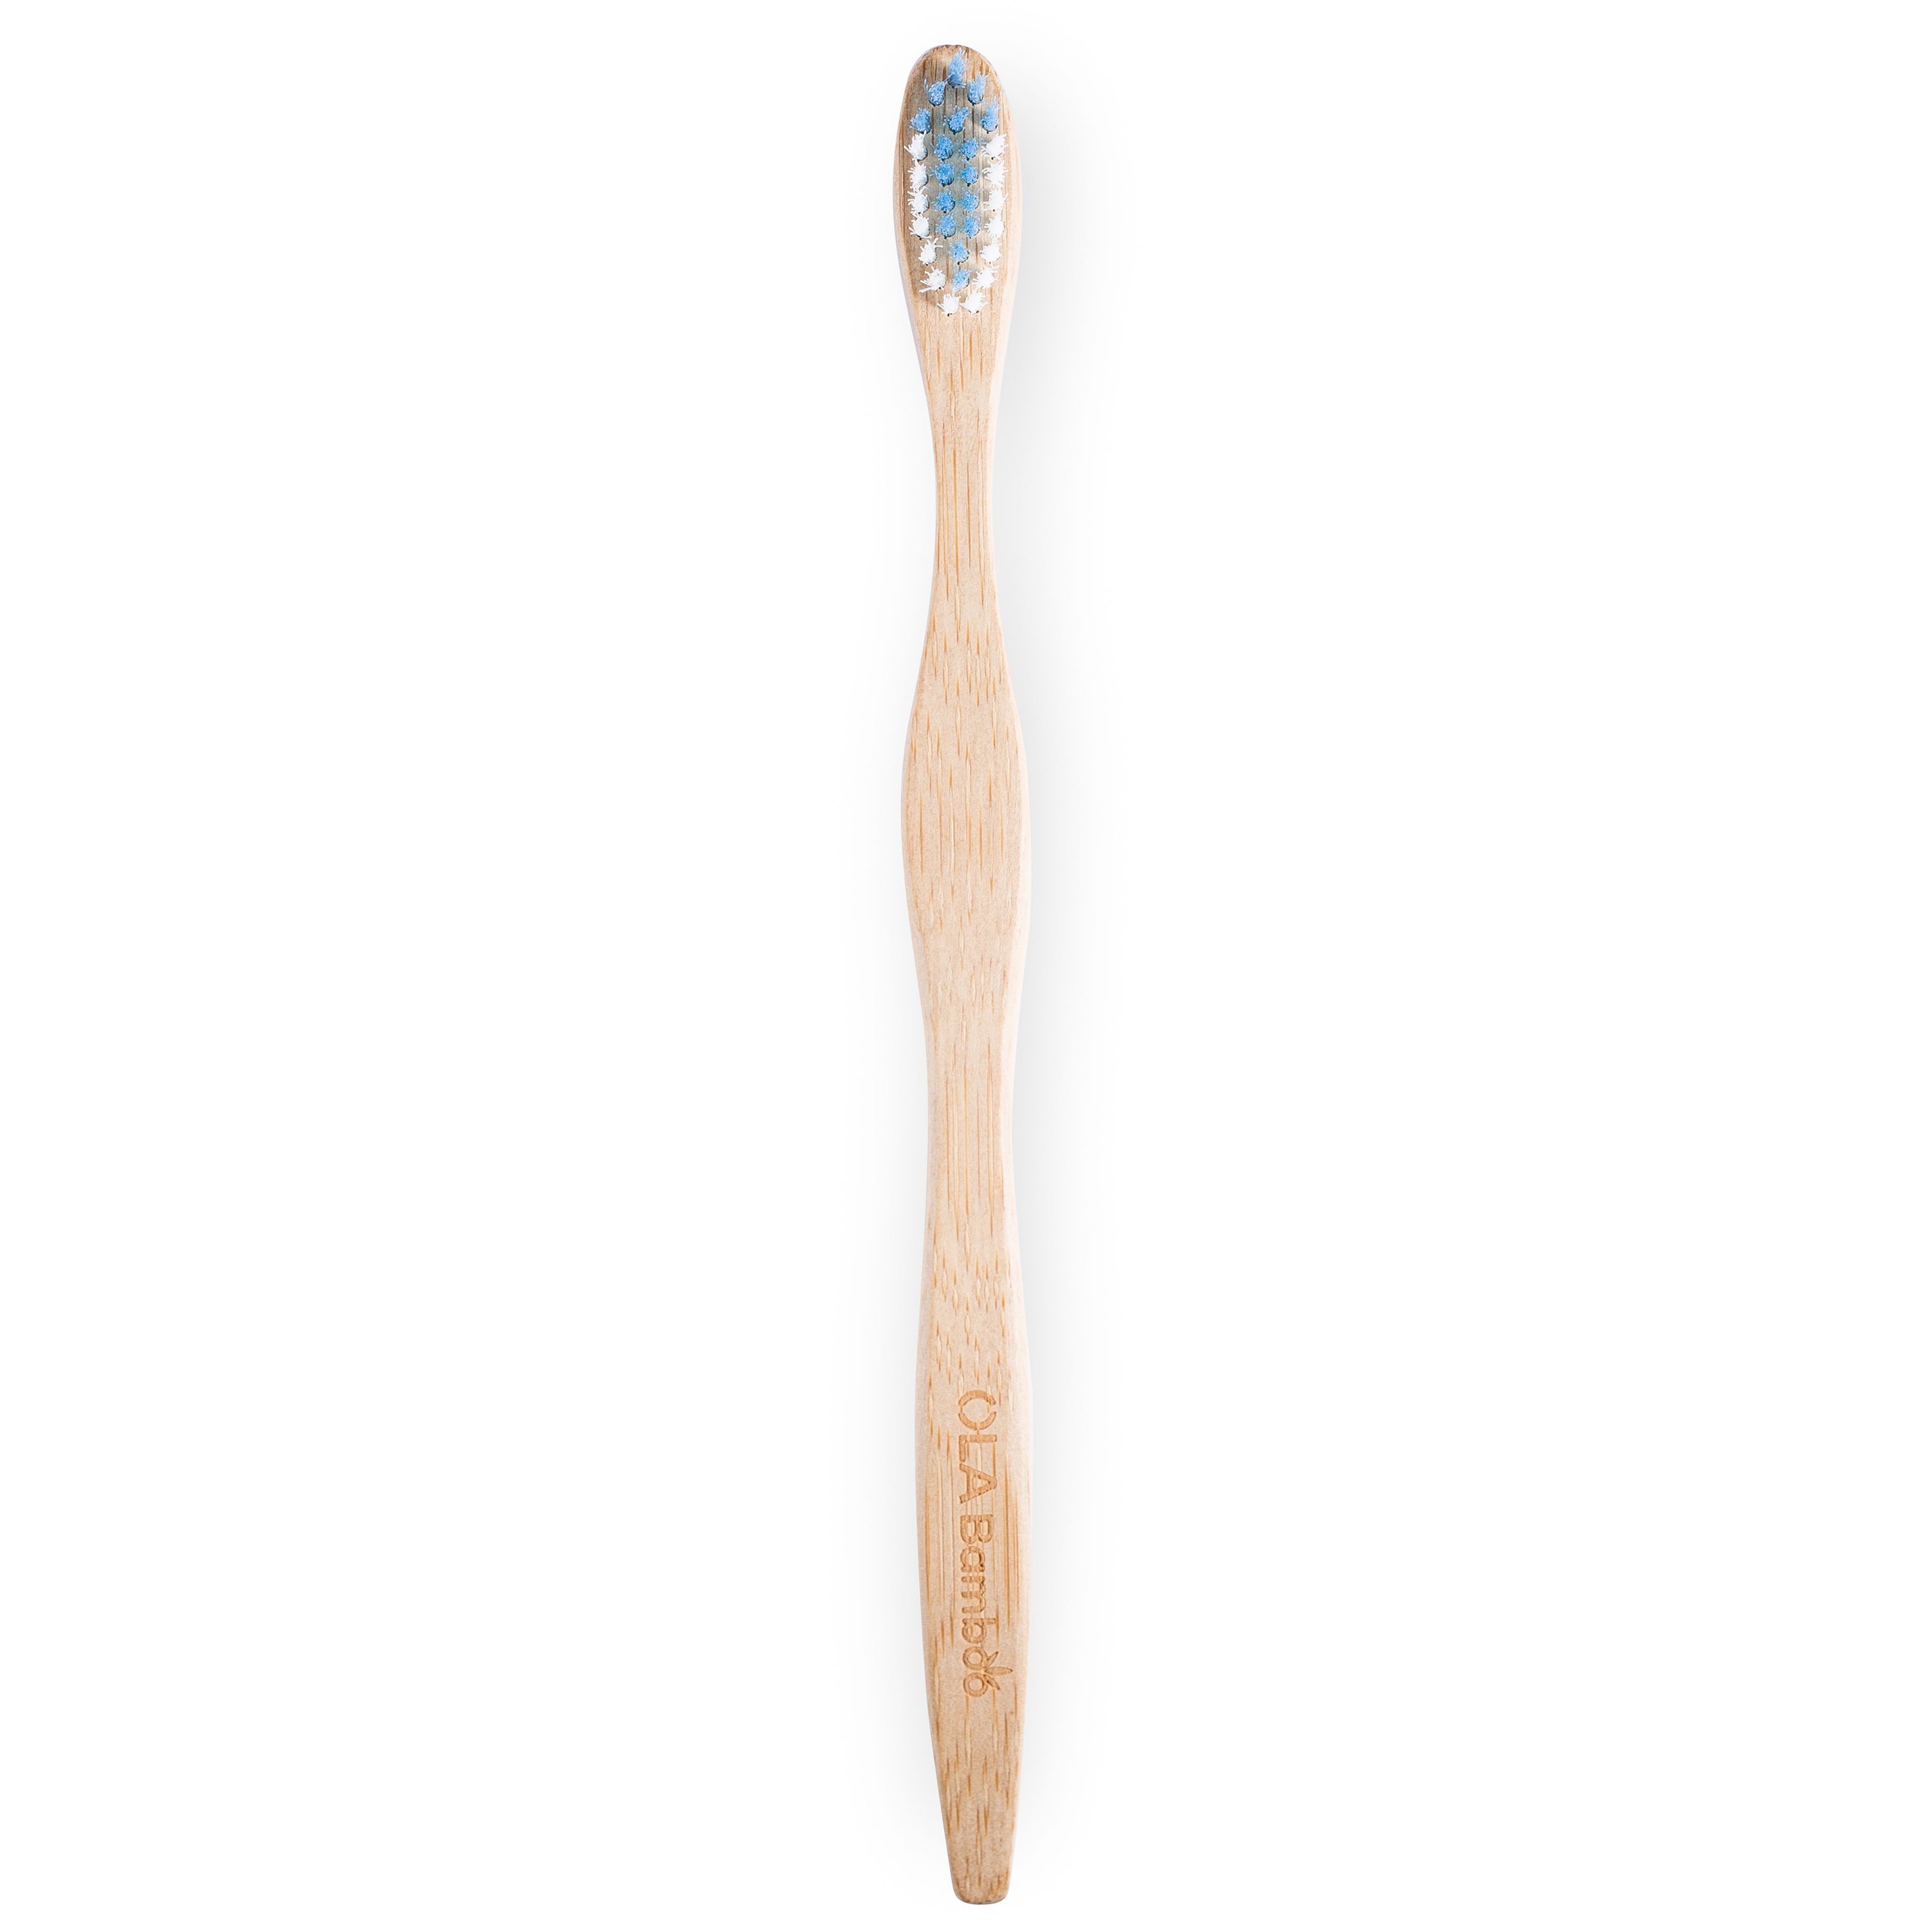 OLABamboo Toothbrush Ultra Soft Οδοντόβουρτσα Από 100% Μπαμπού Πολύ Μαλακή 1 Τεμάχιο – μπλέ